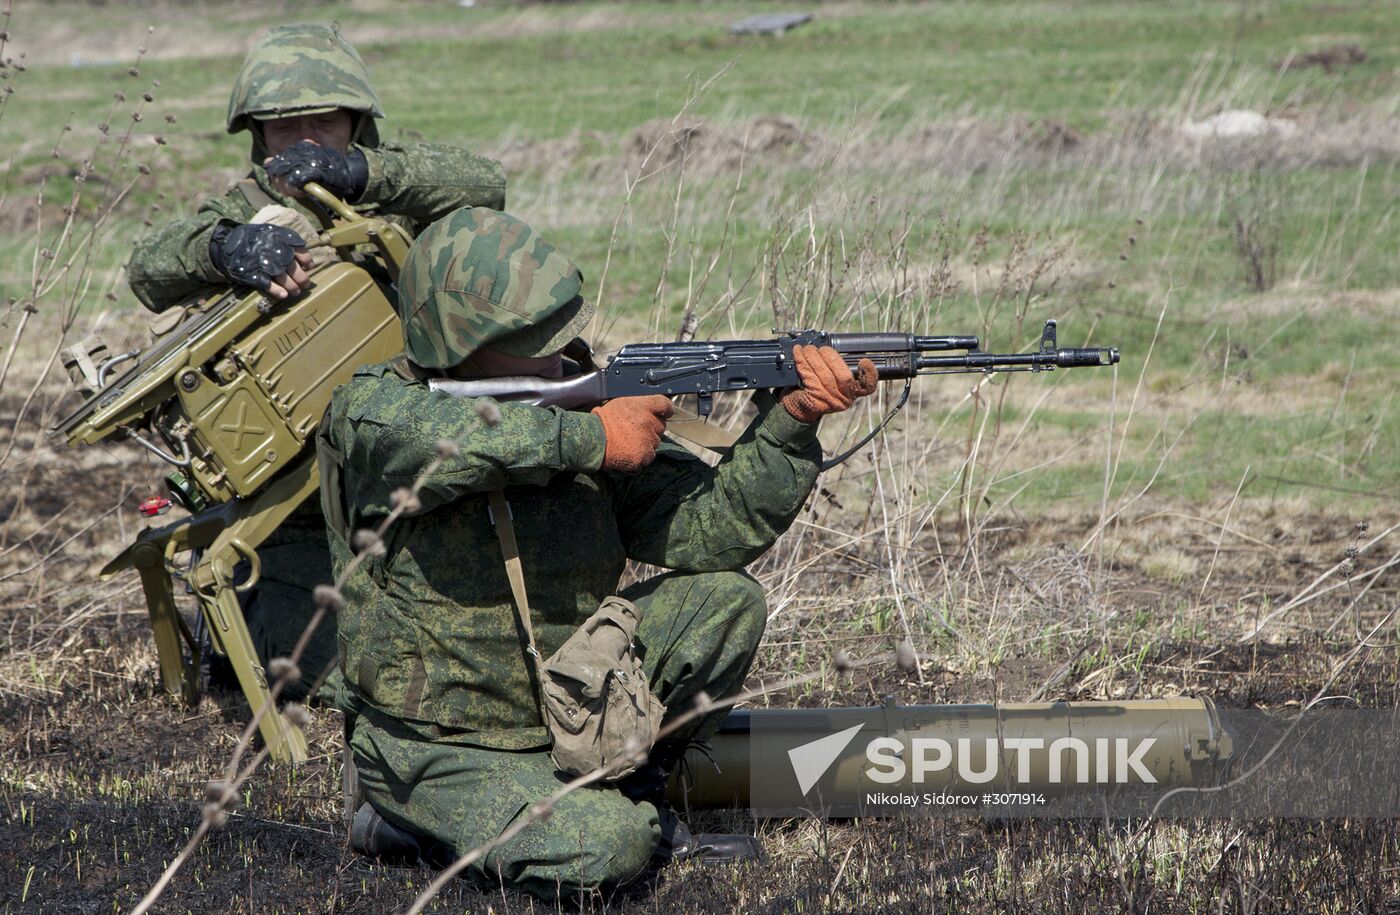 LPR People’s Militia holds military exercises